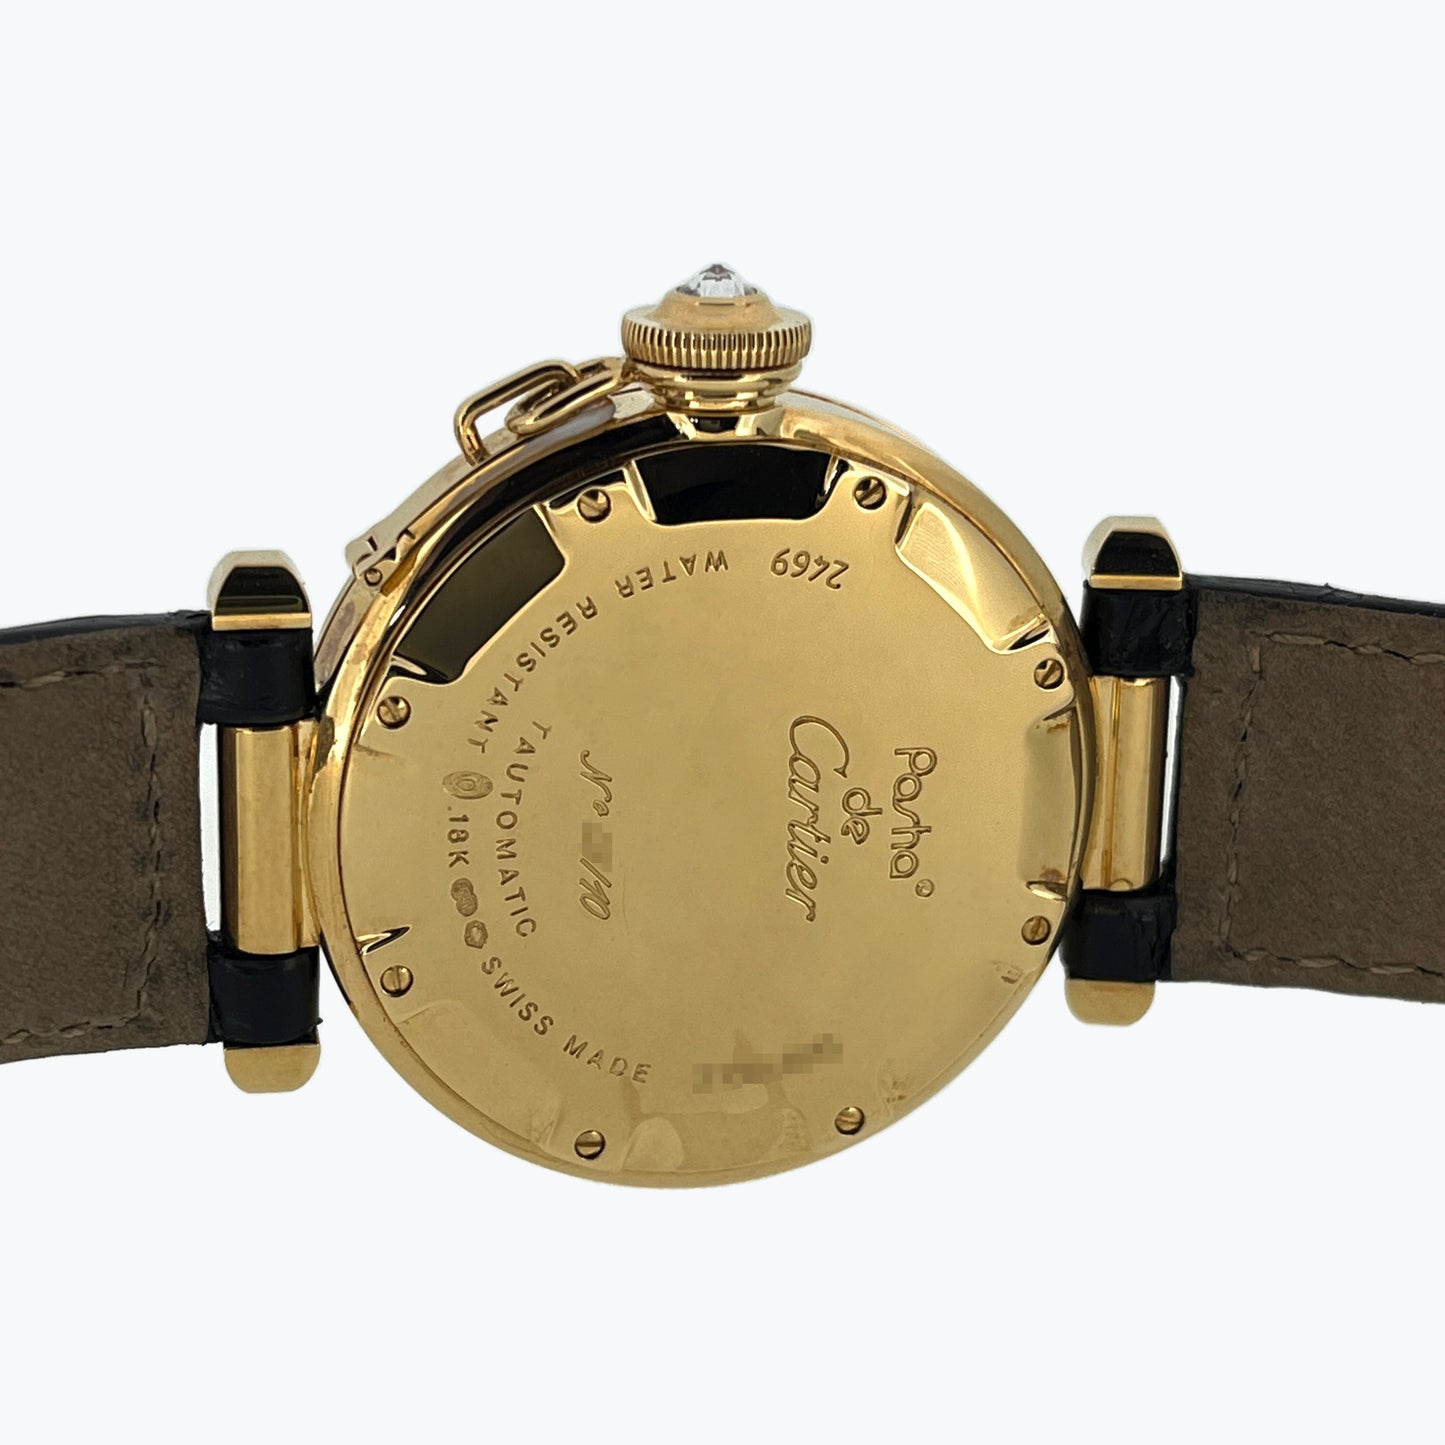 Cartier Limited Pasha with Cloisonné Enamel Dial Phoenix Motif, Yellow Gold and Diamond-Set